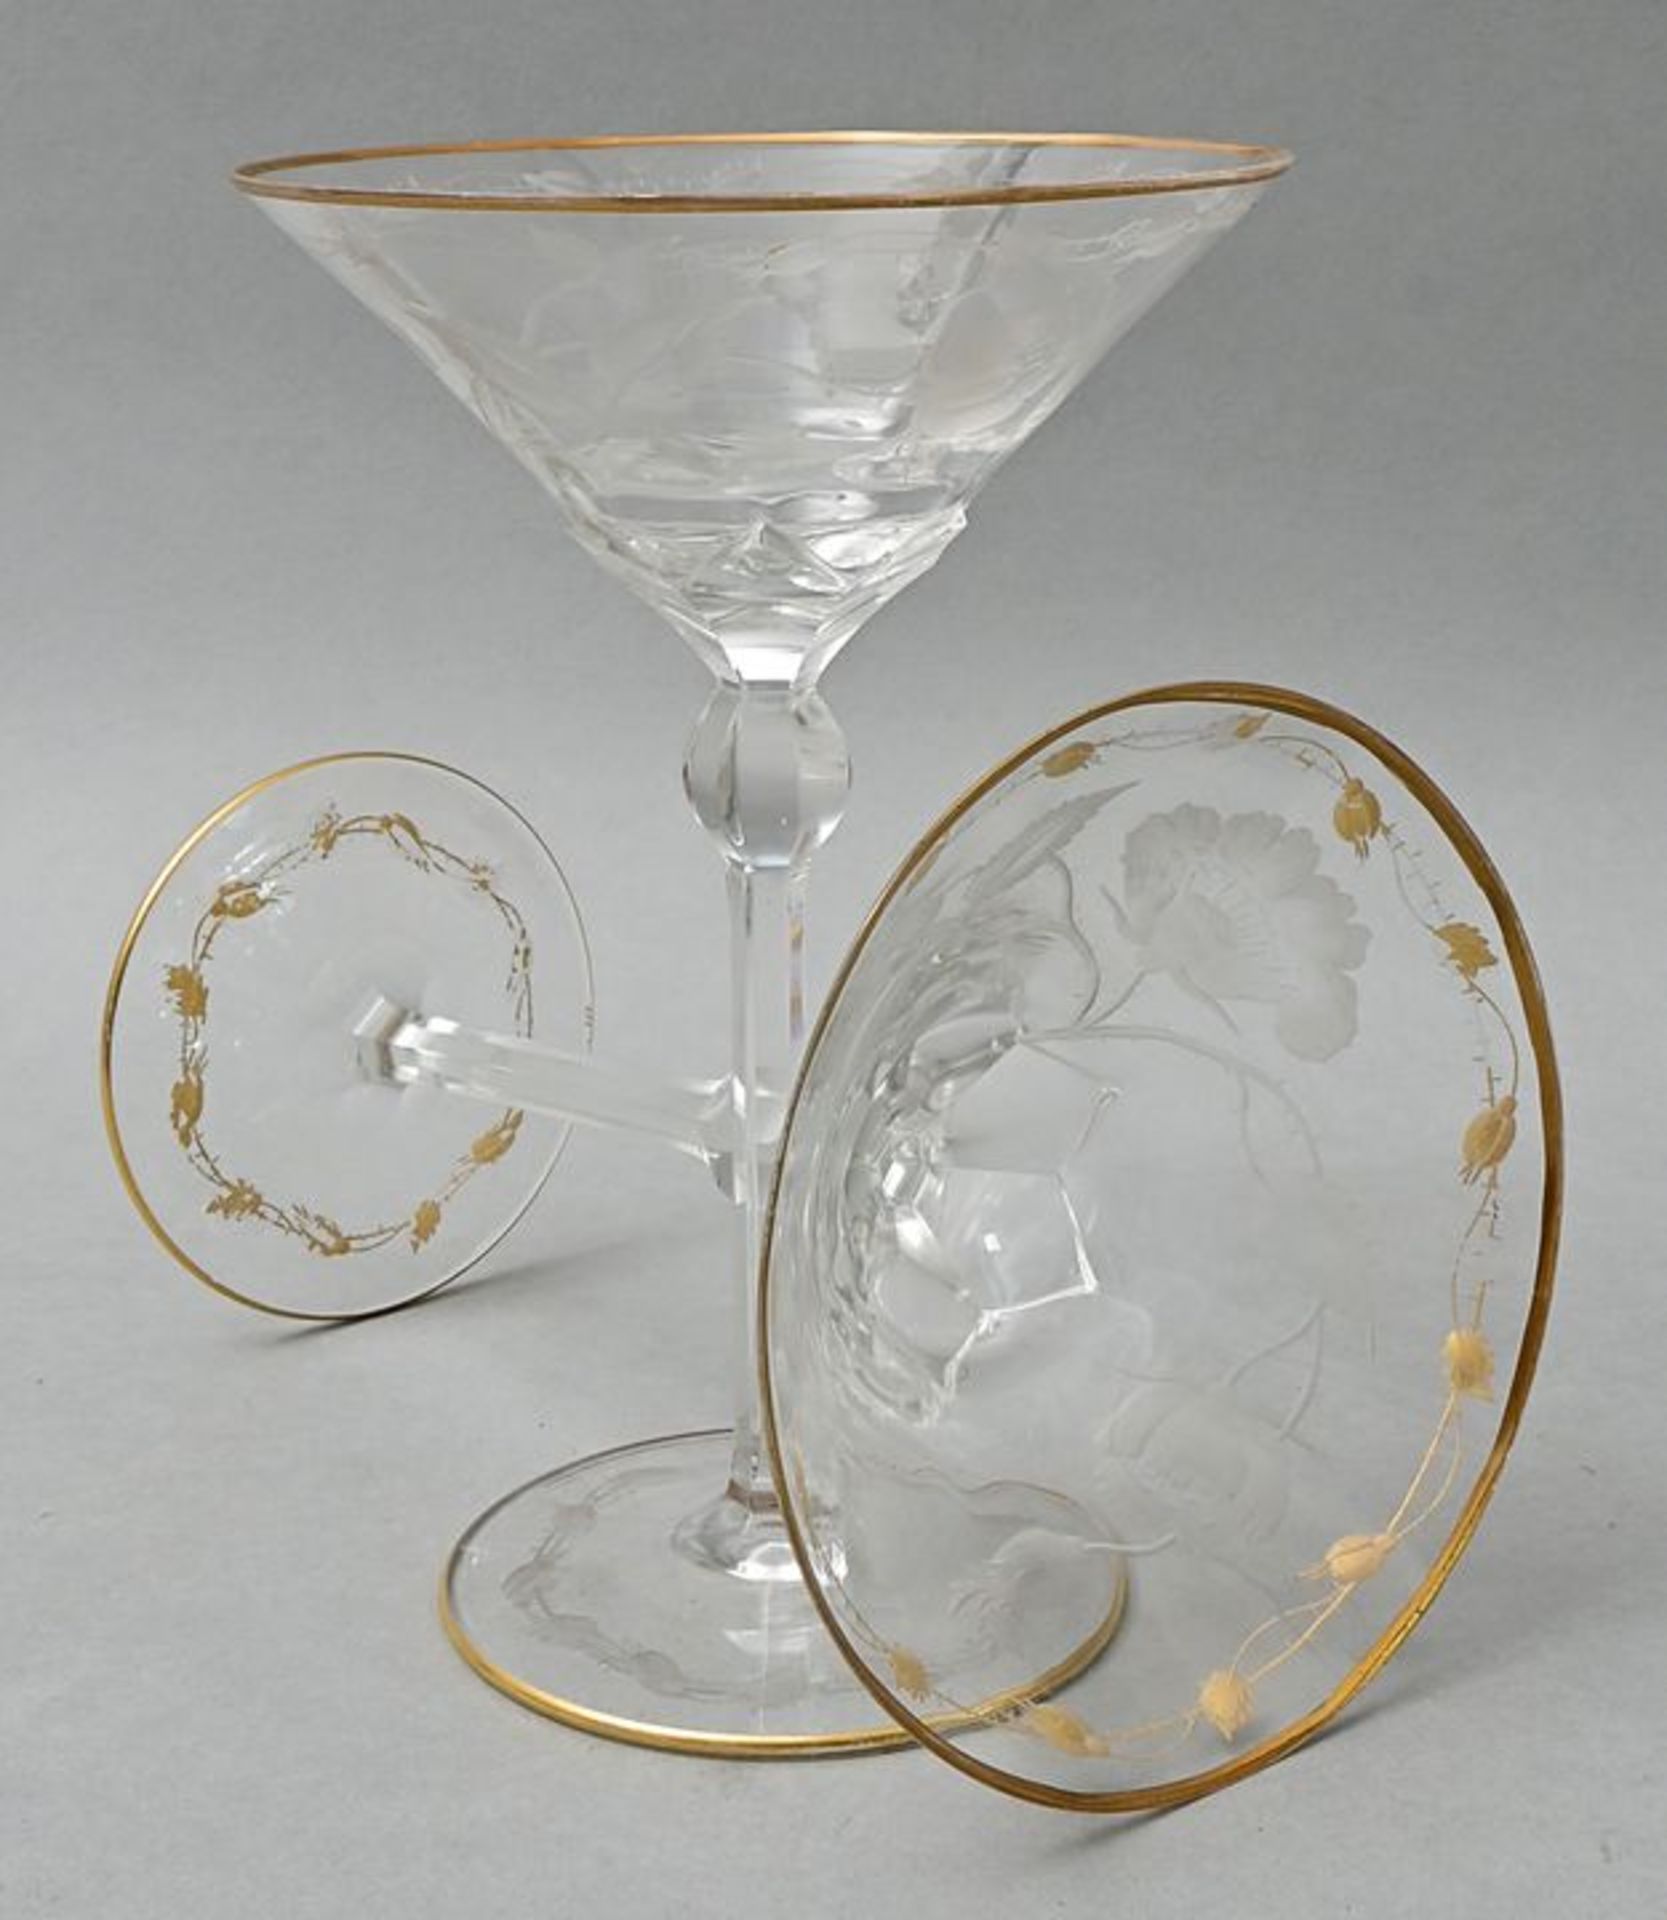 Satz Sektschalen/ champagne glasses - Bild 3 aus 3